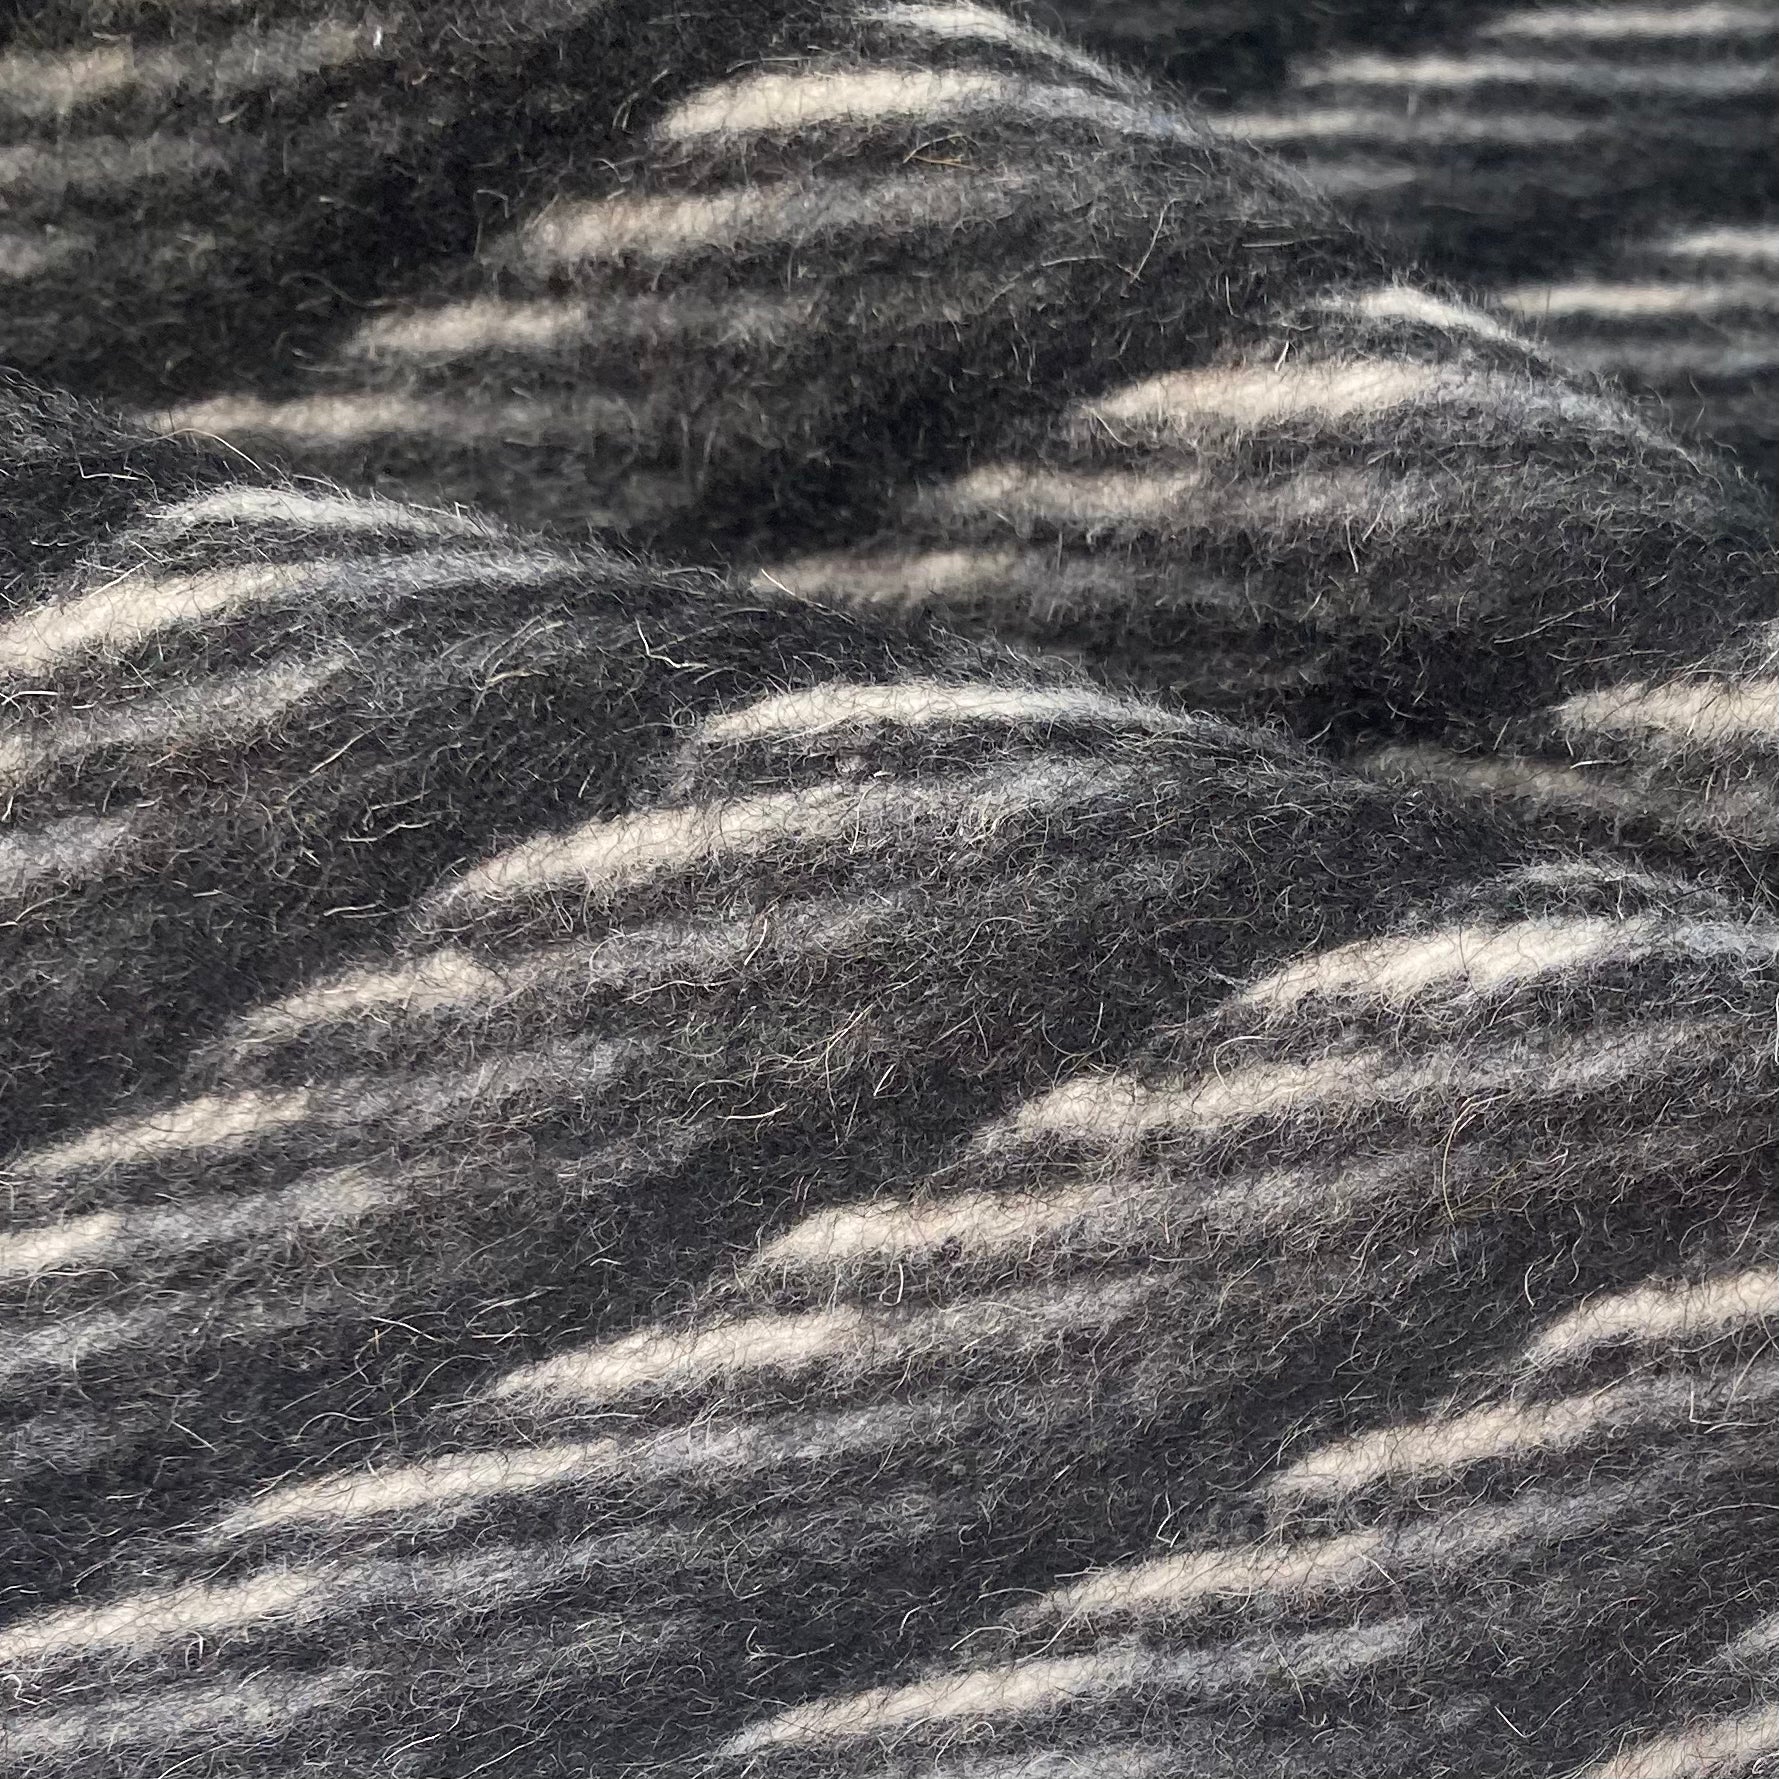 Wool Coating - Striped - Black/White/Grey